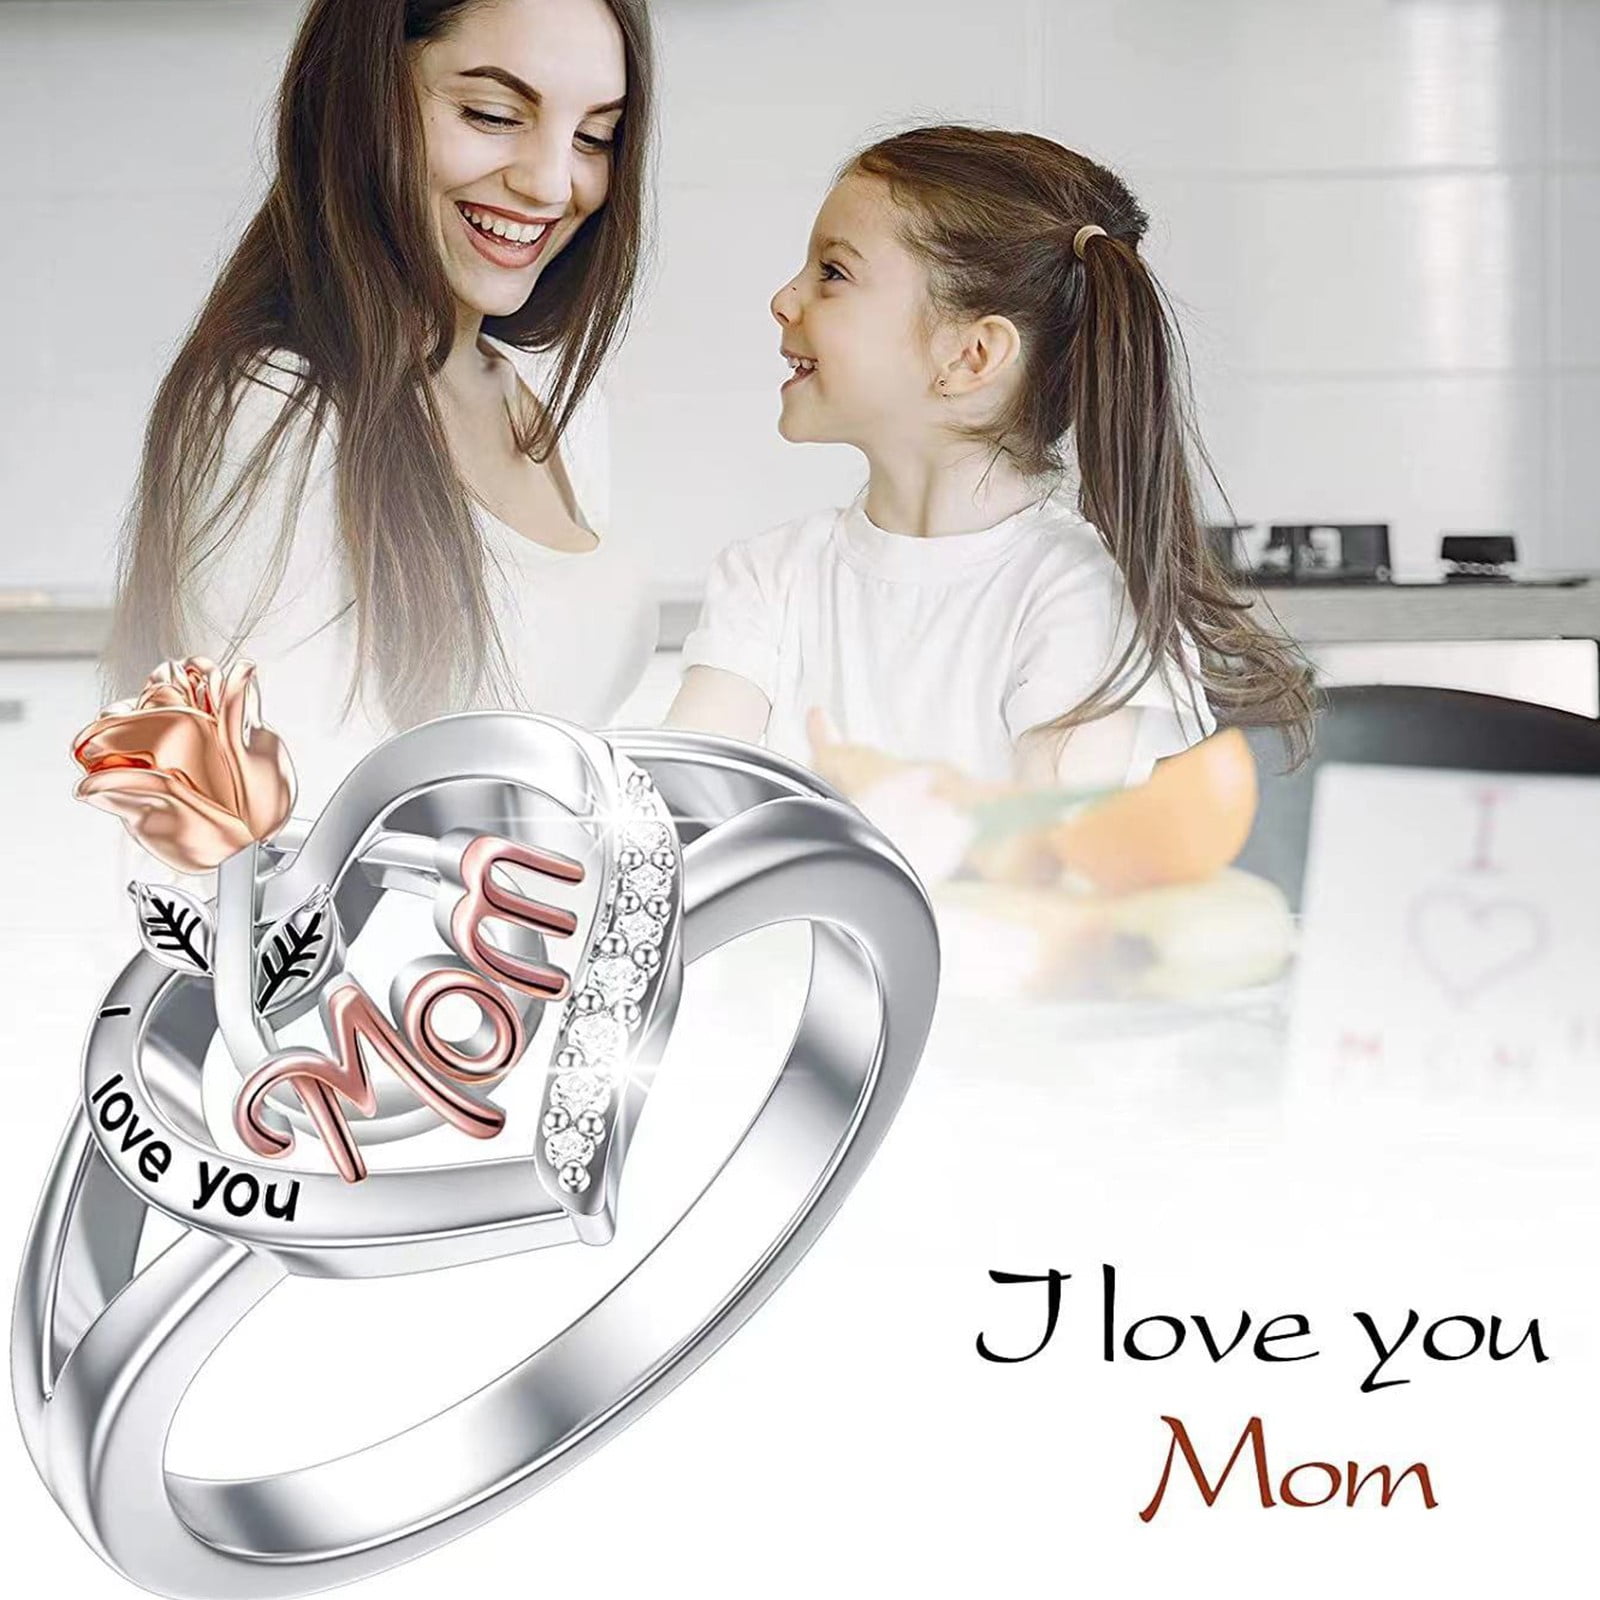 Skpblutn Rings Women Girls To My Mom Daughter Love Rhinestone Rose Ring Gifts Valentine s Day Gift 12b49454 9936 4da5 baae dc7b46746d13.0ff32ac62dca1b9f8e815829ec3ffe70